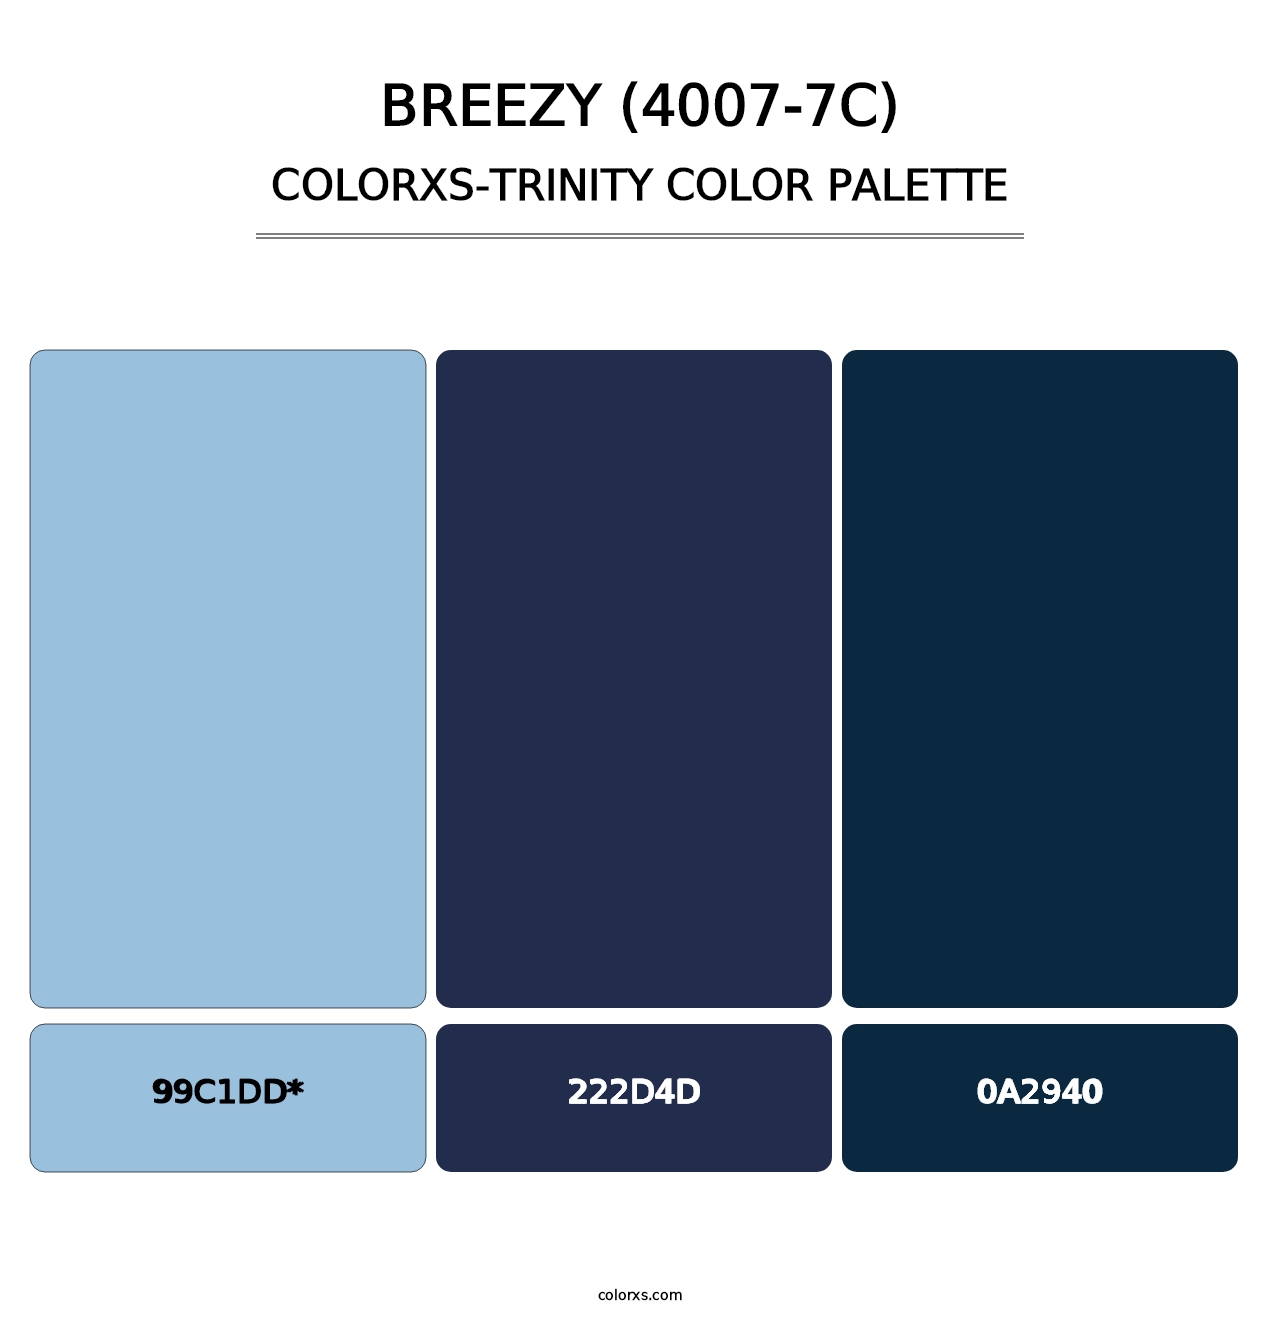 Breezy (4007-7C) - Colorxs Trinity Palette